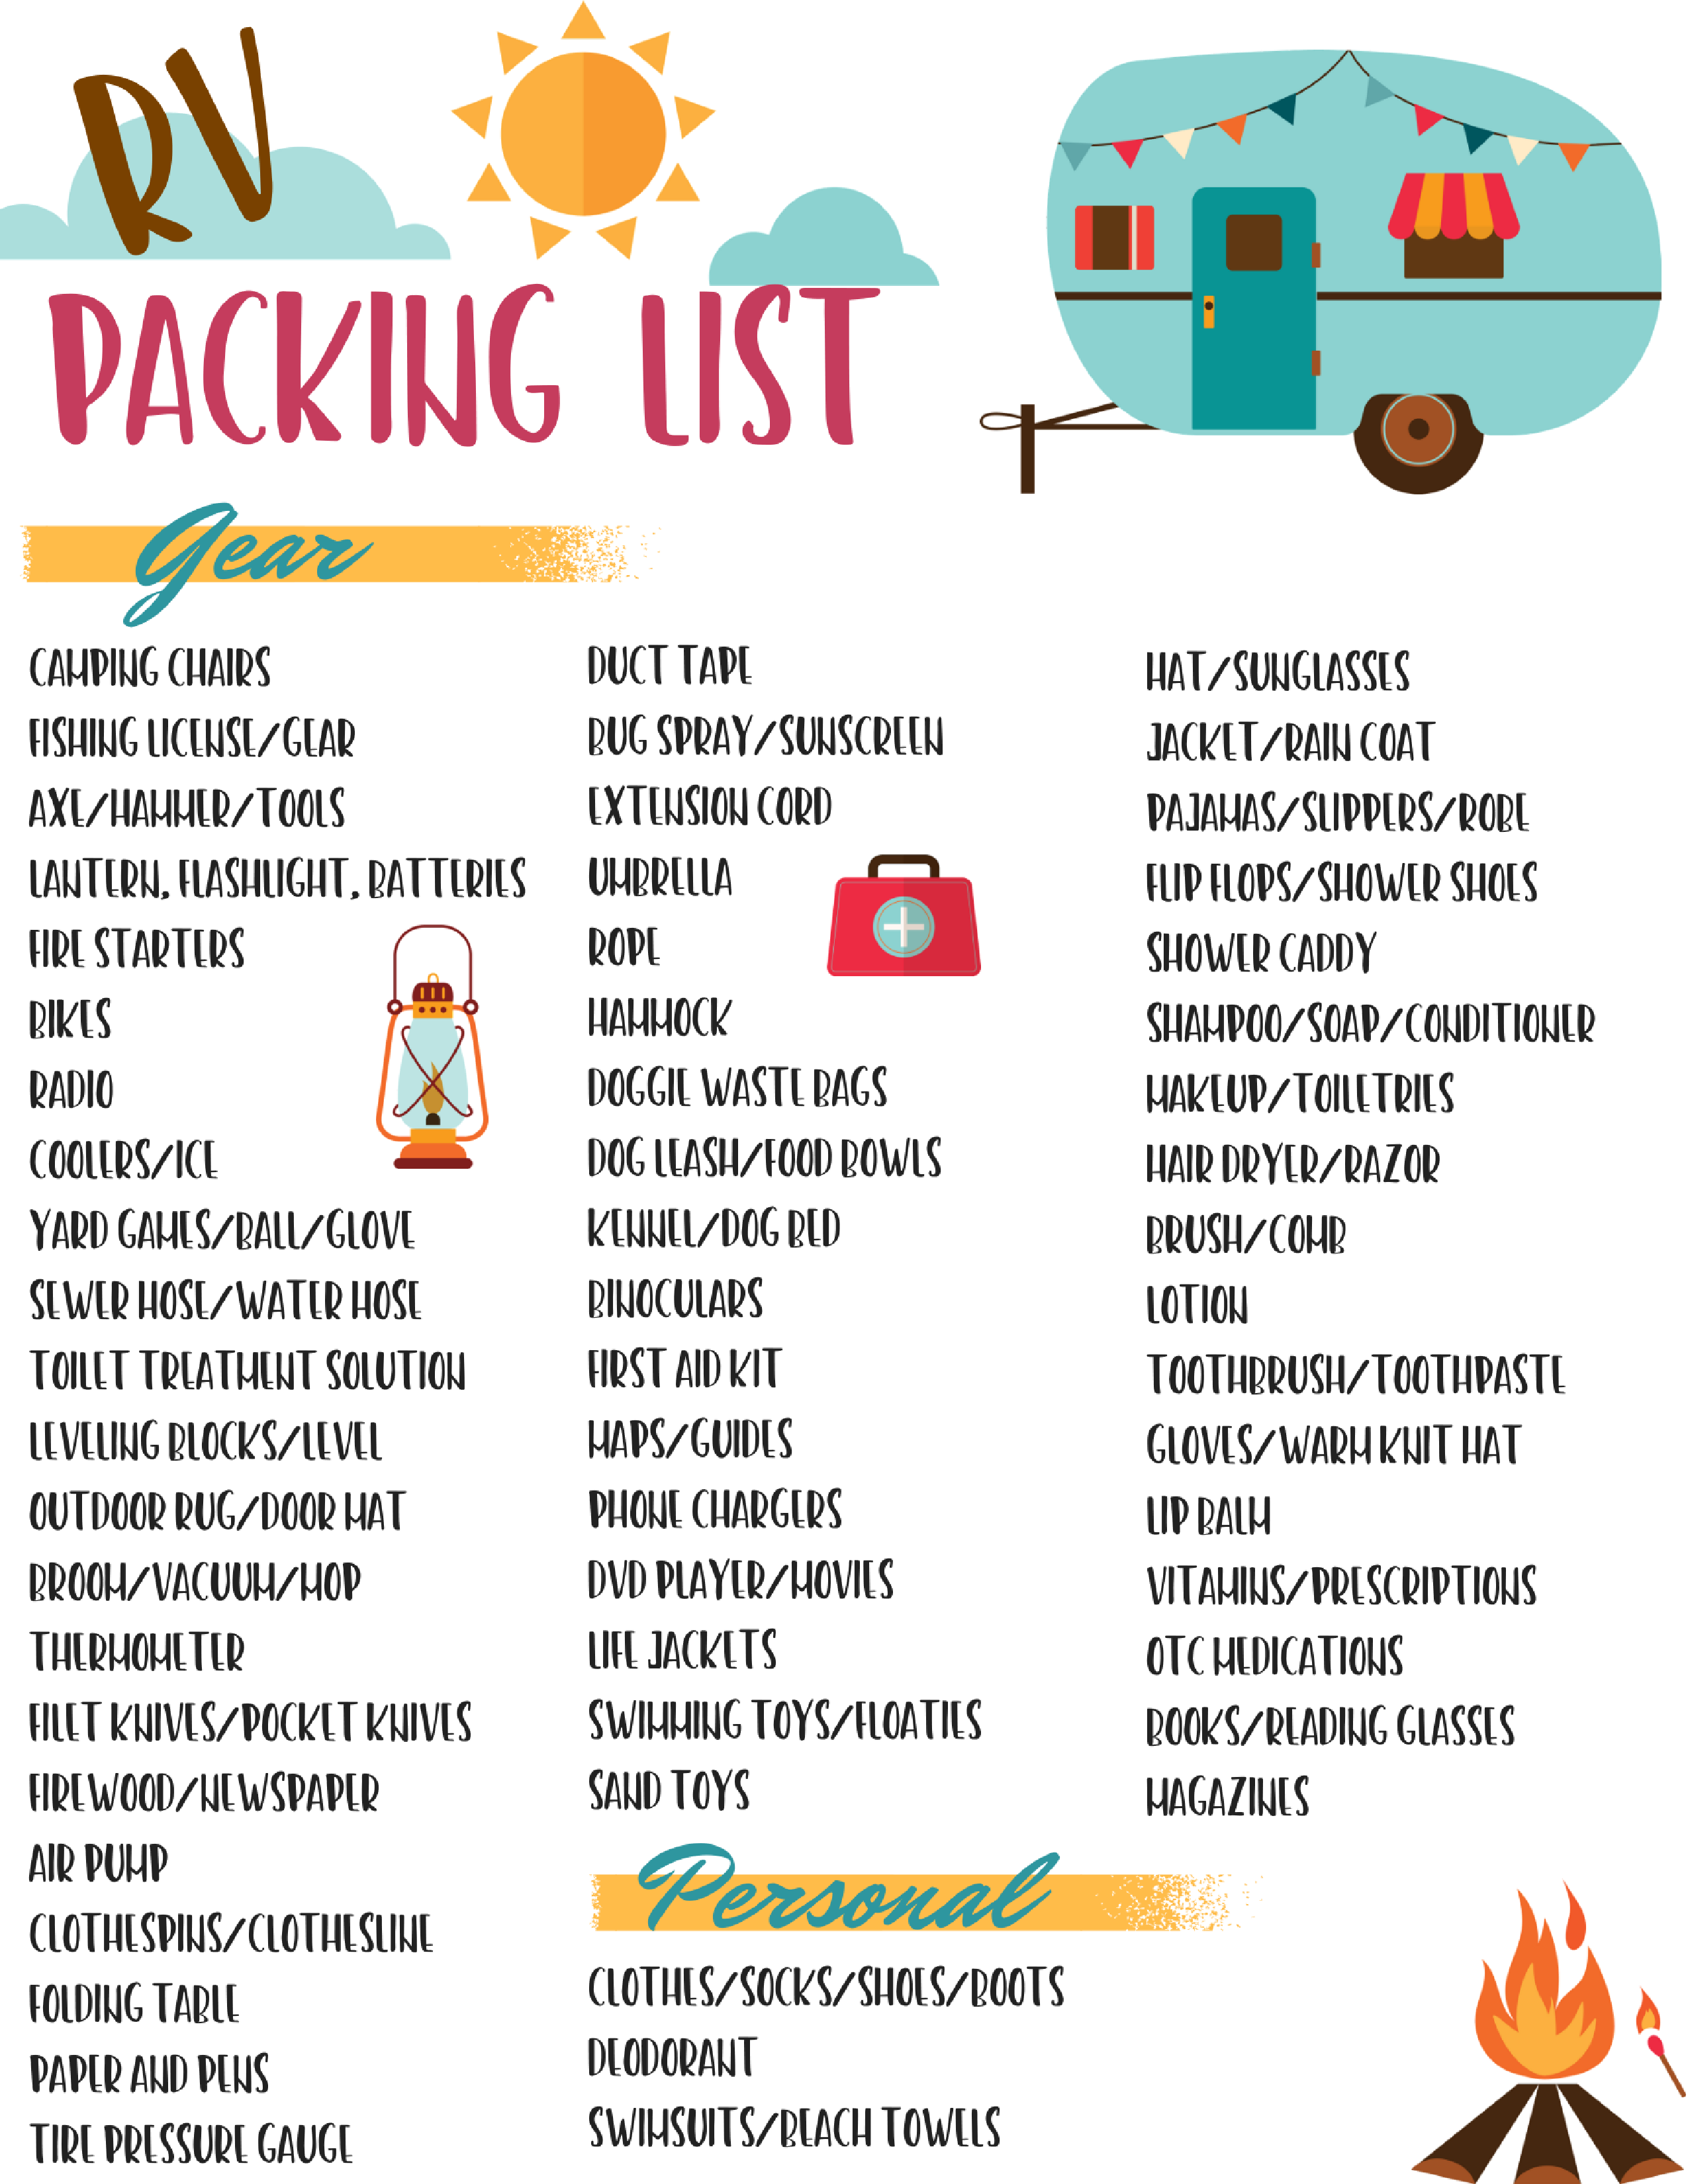 weekend camping checklist